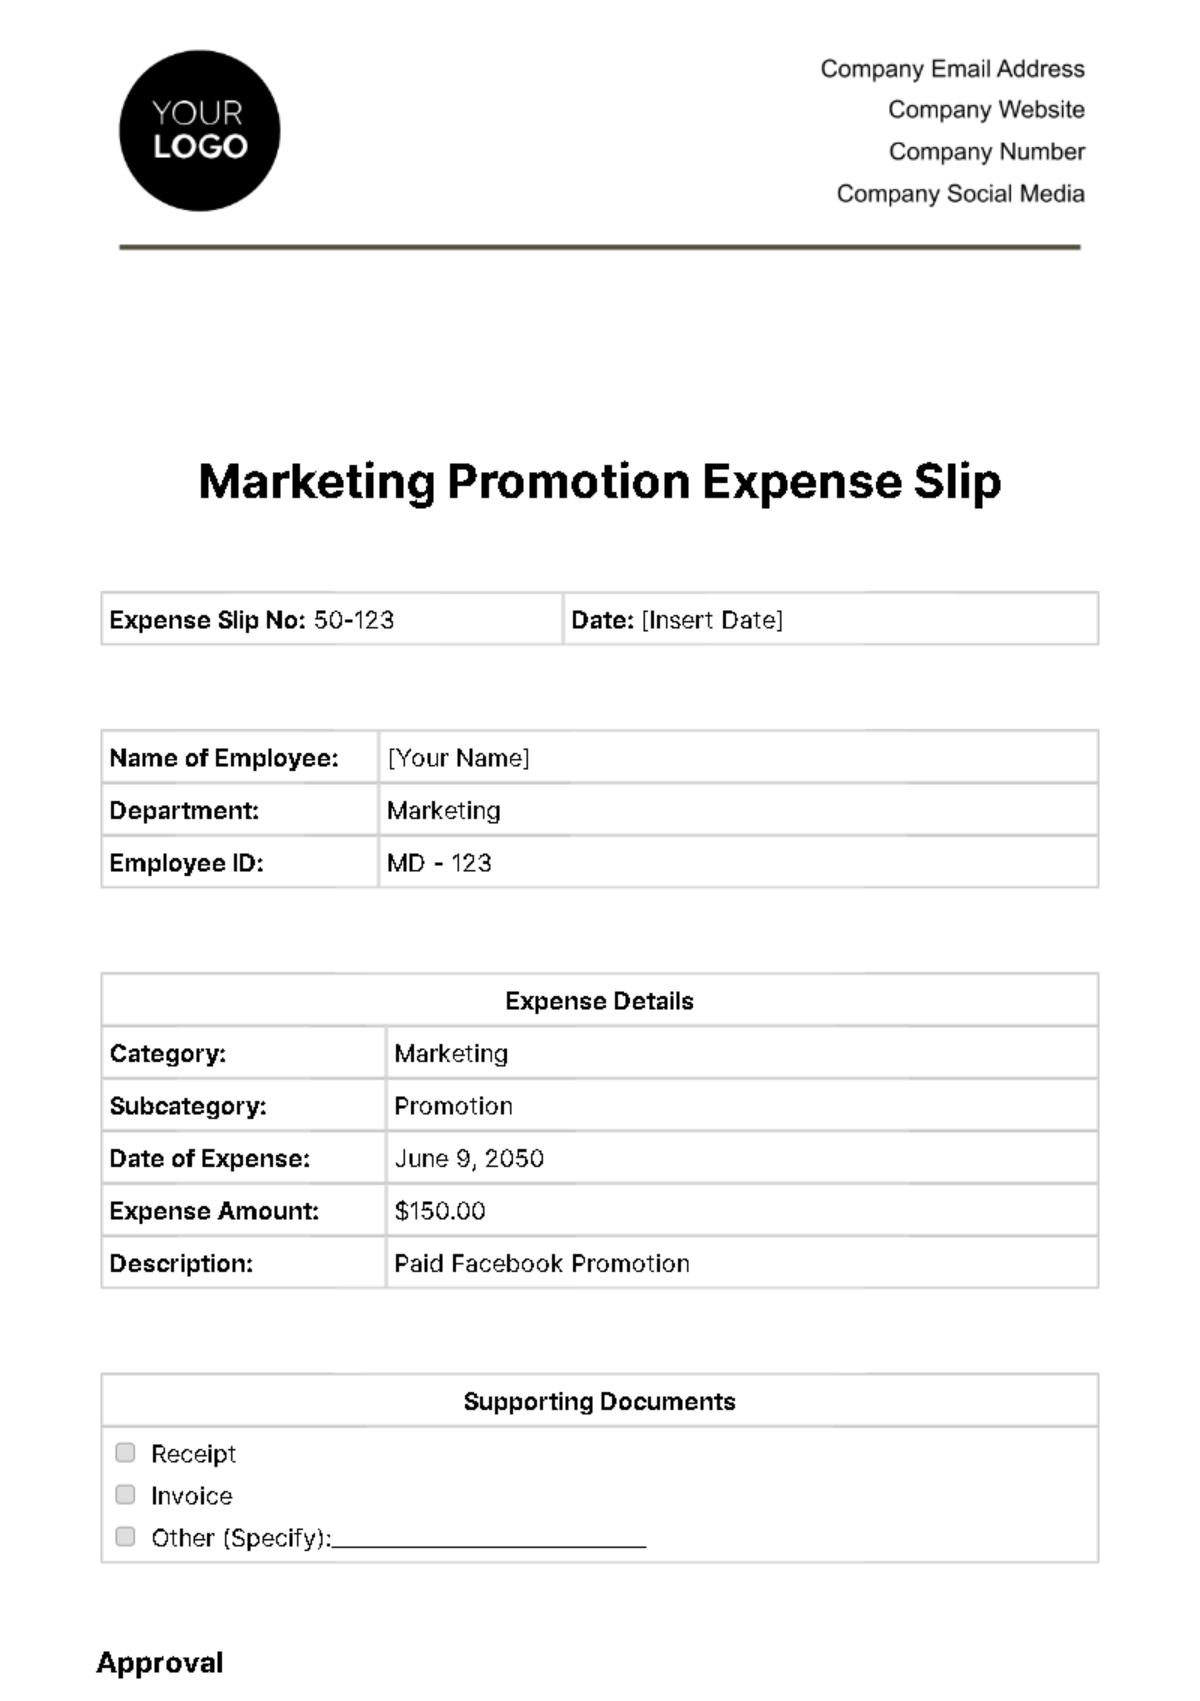 Marketing Promotion Expense Slip Template